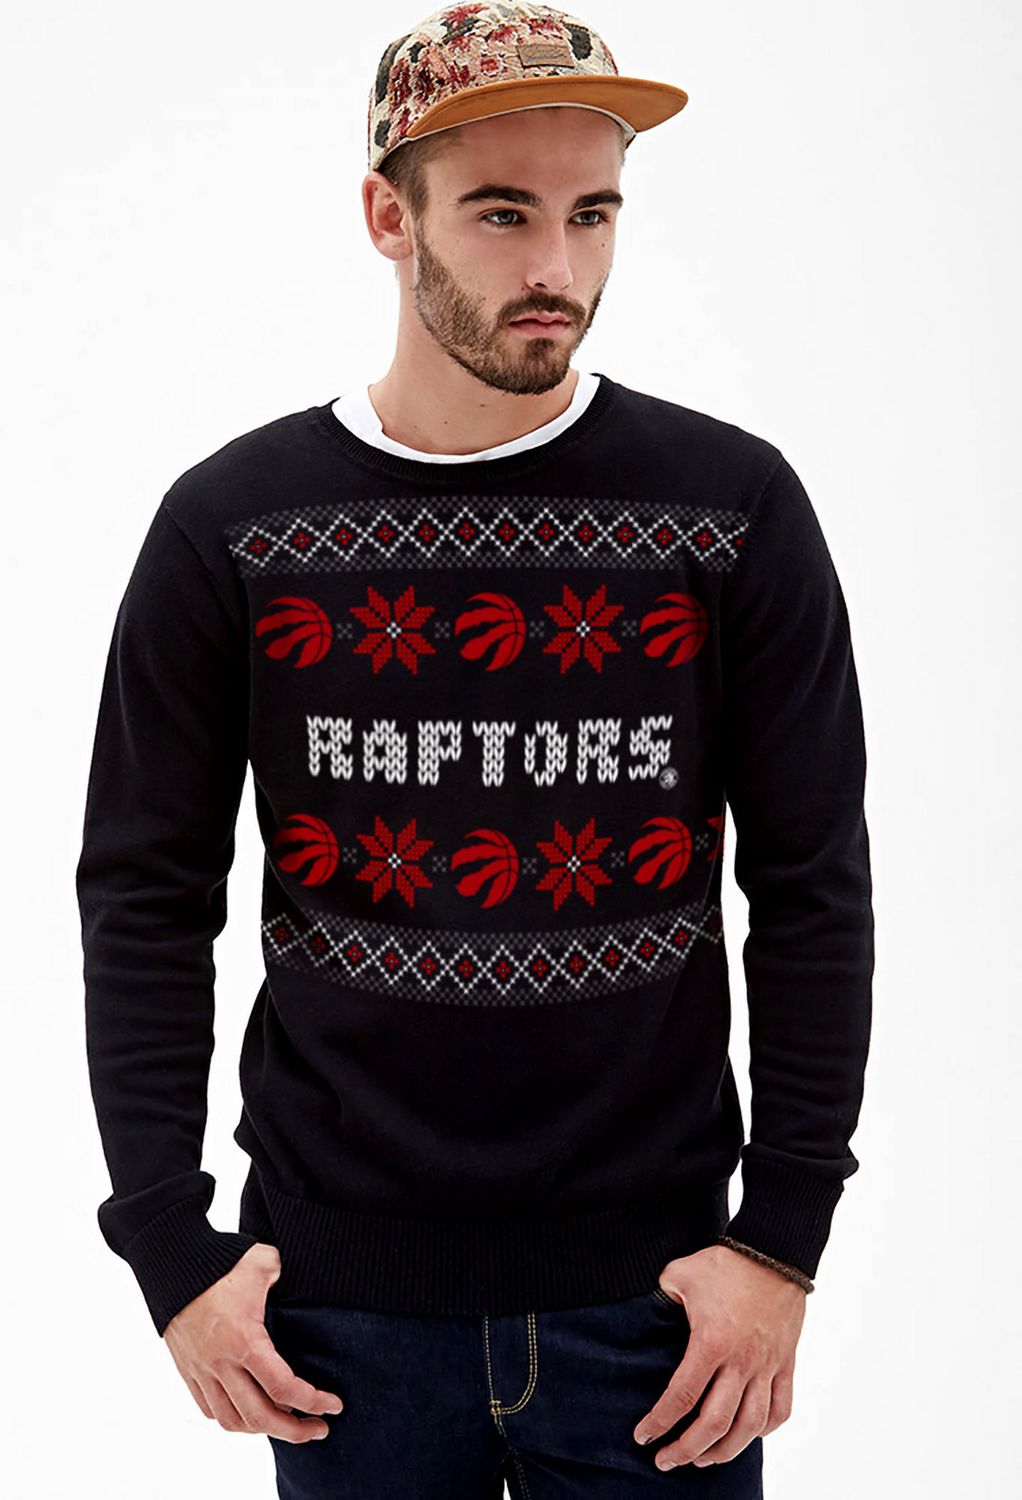 toronto raptors ugly christmas sweater